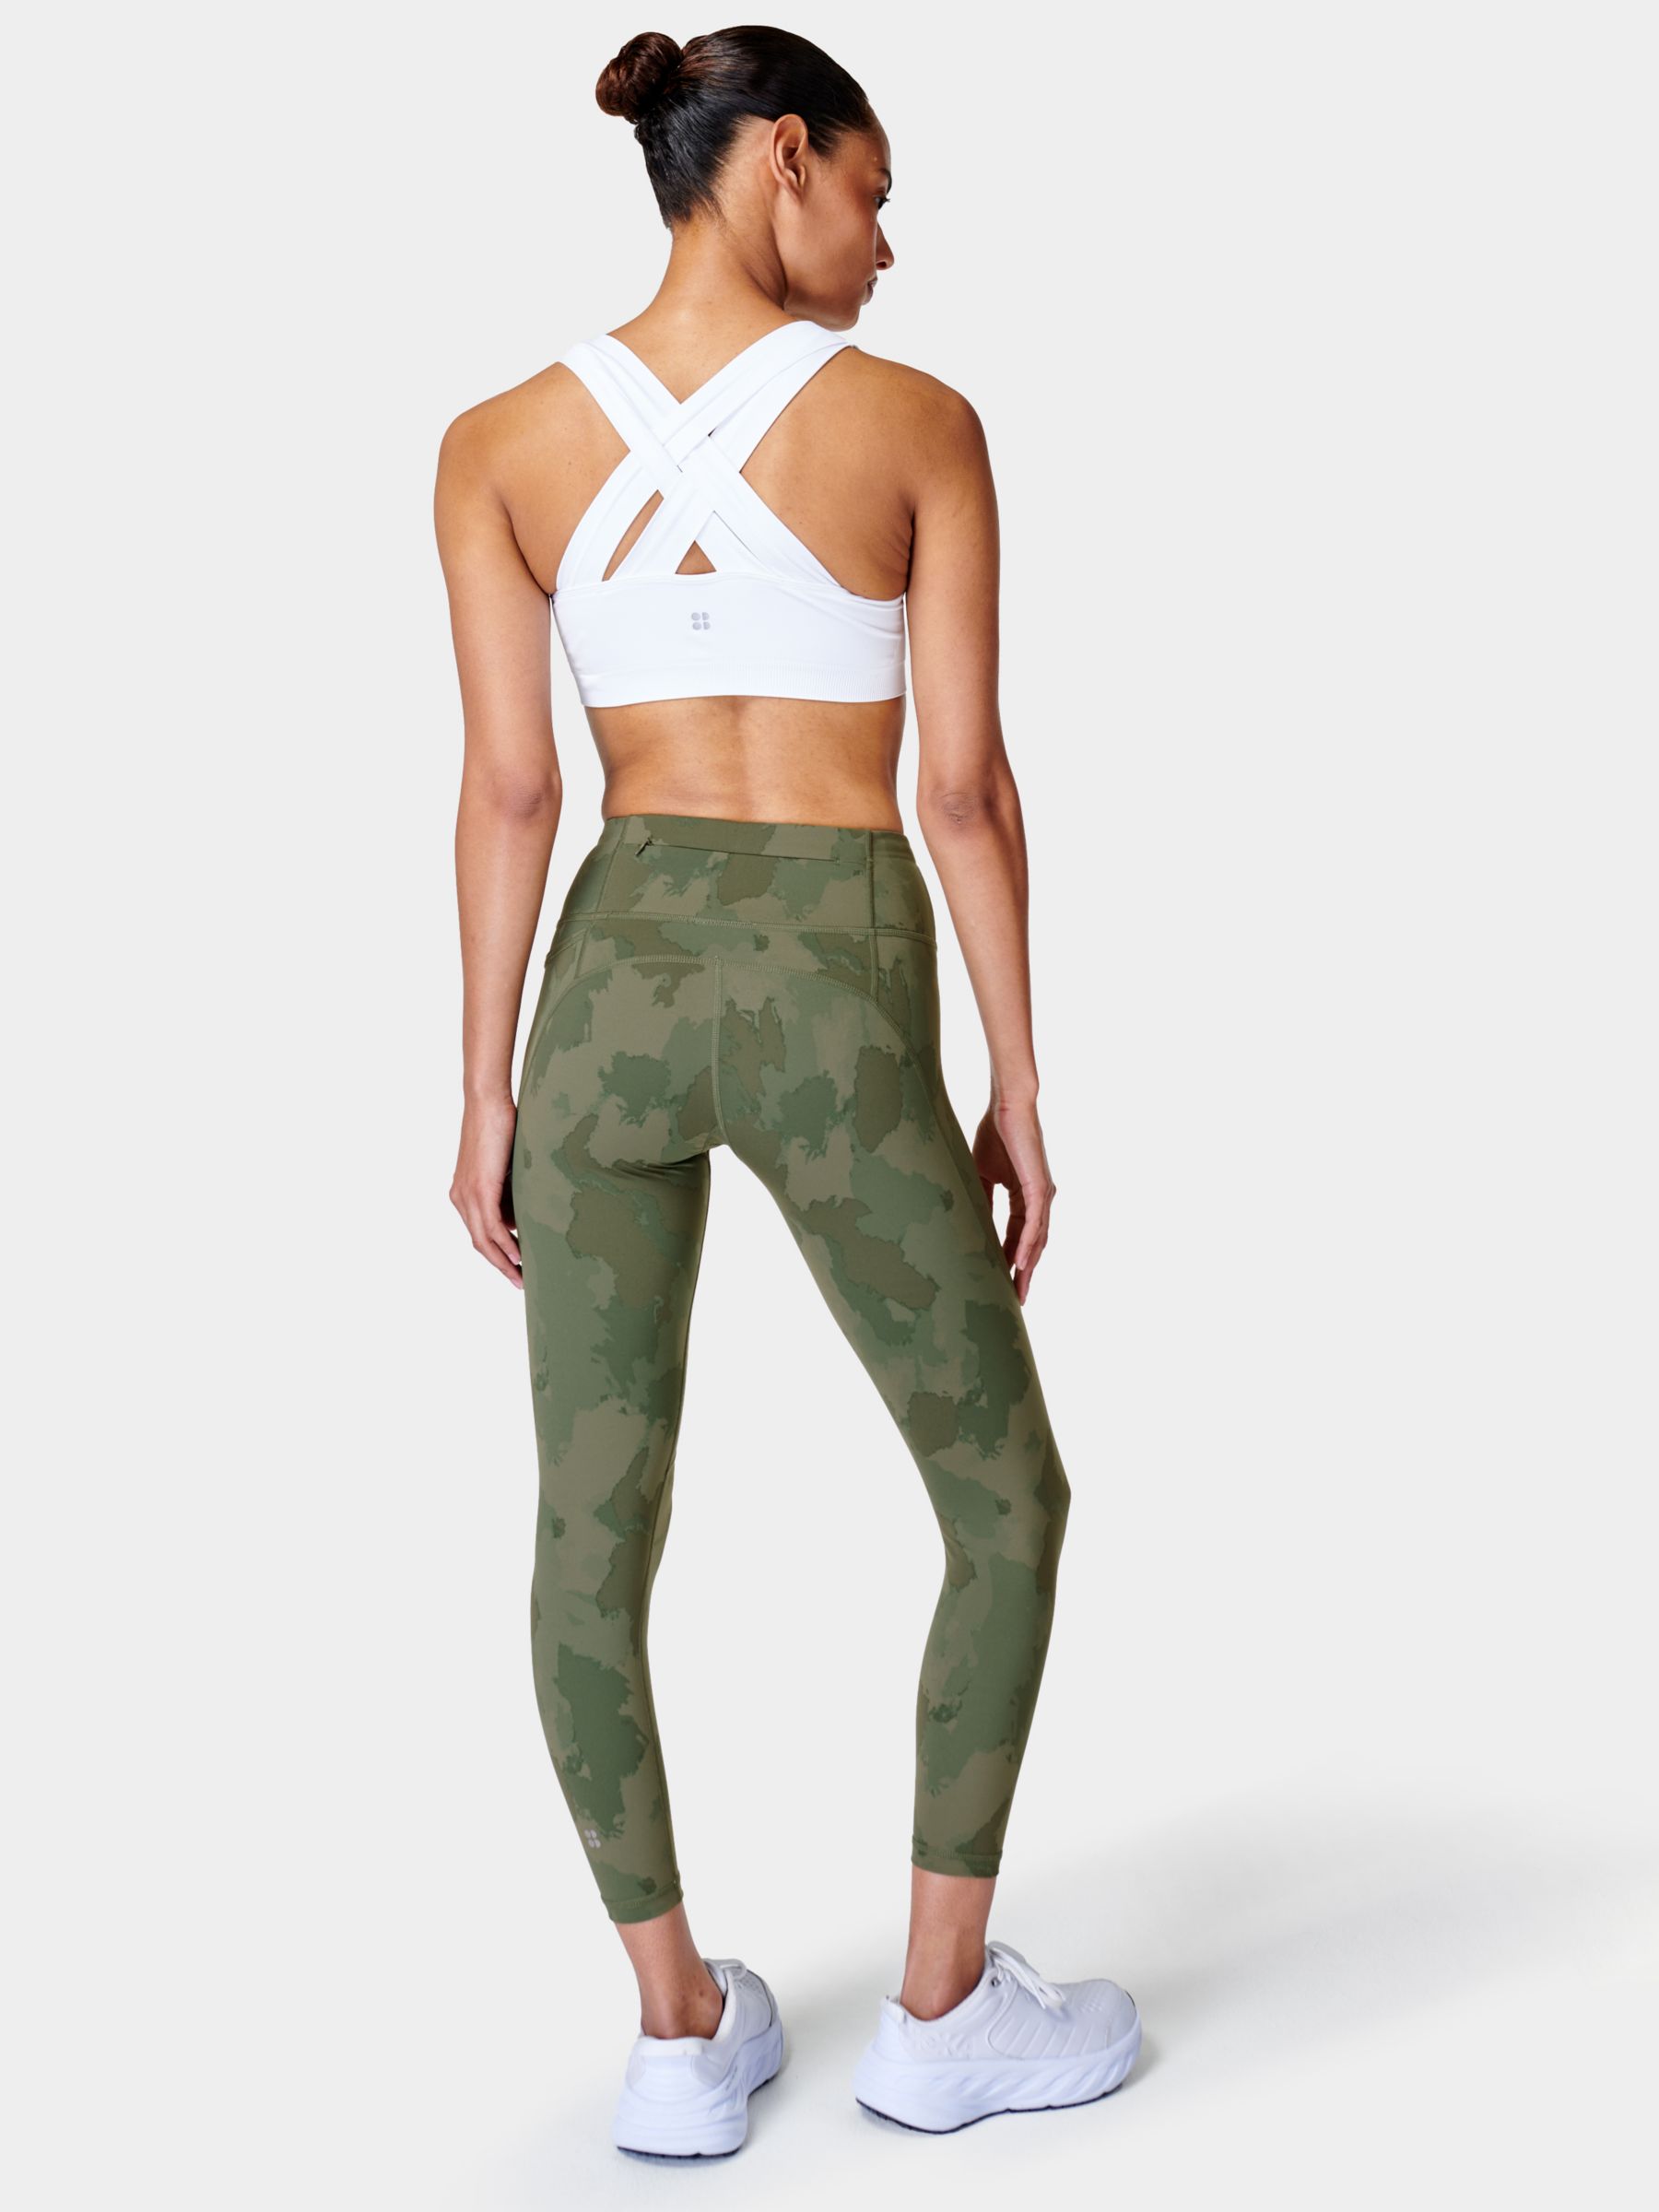 Sweaty Betty Power 7/8 Gym Leggings, Green Paint Camo Print at